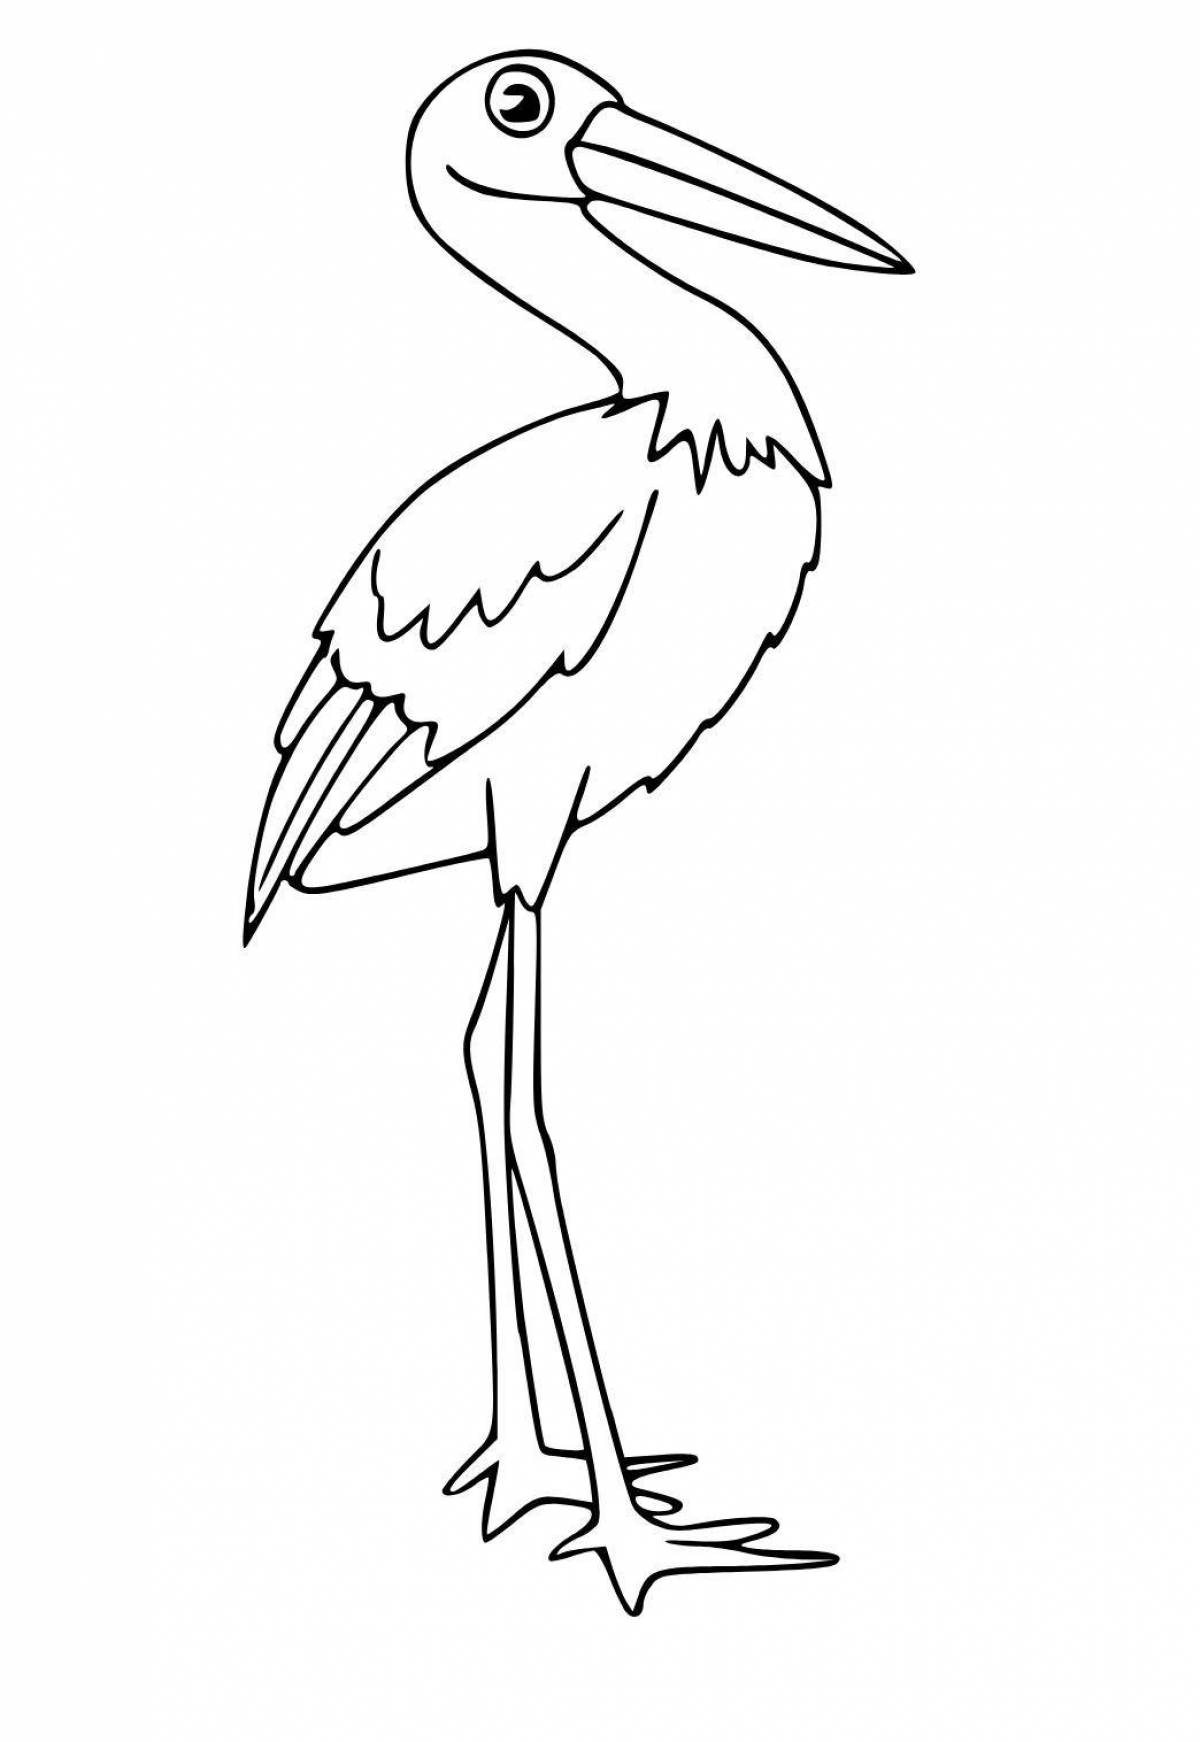 Adorable black stork coloring book for kids